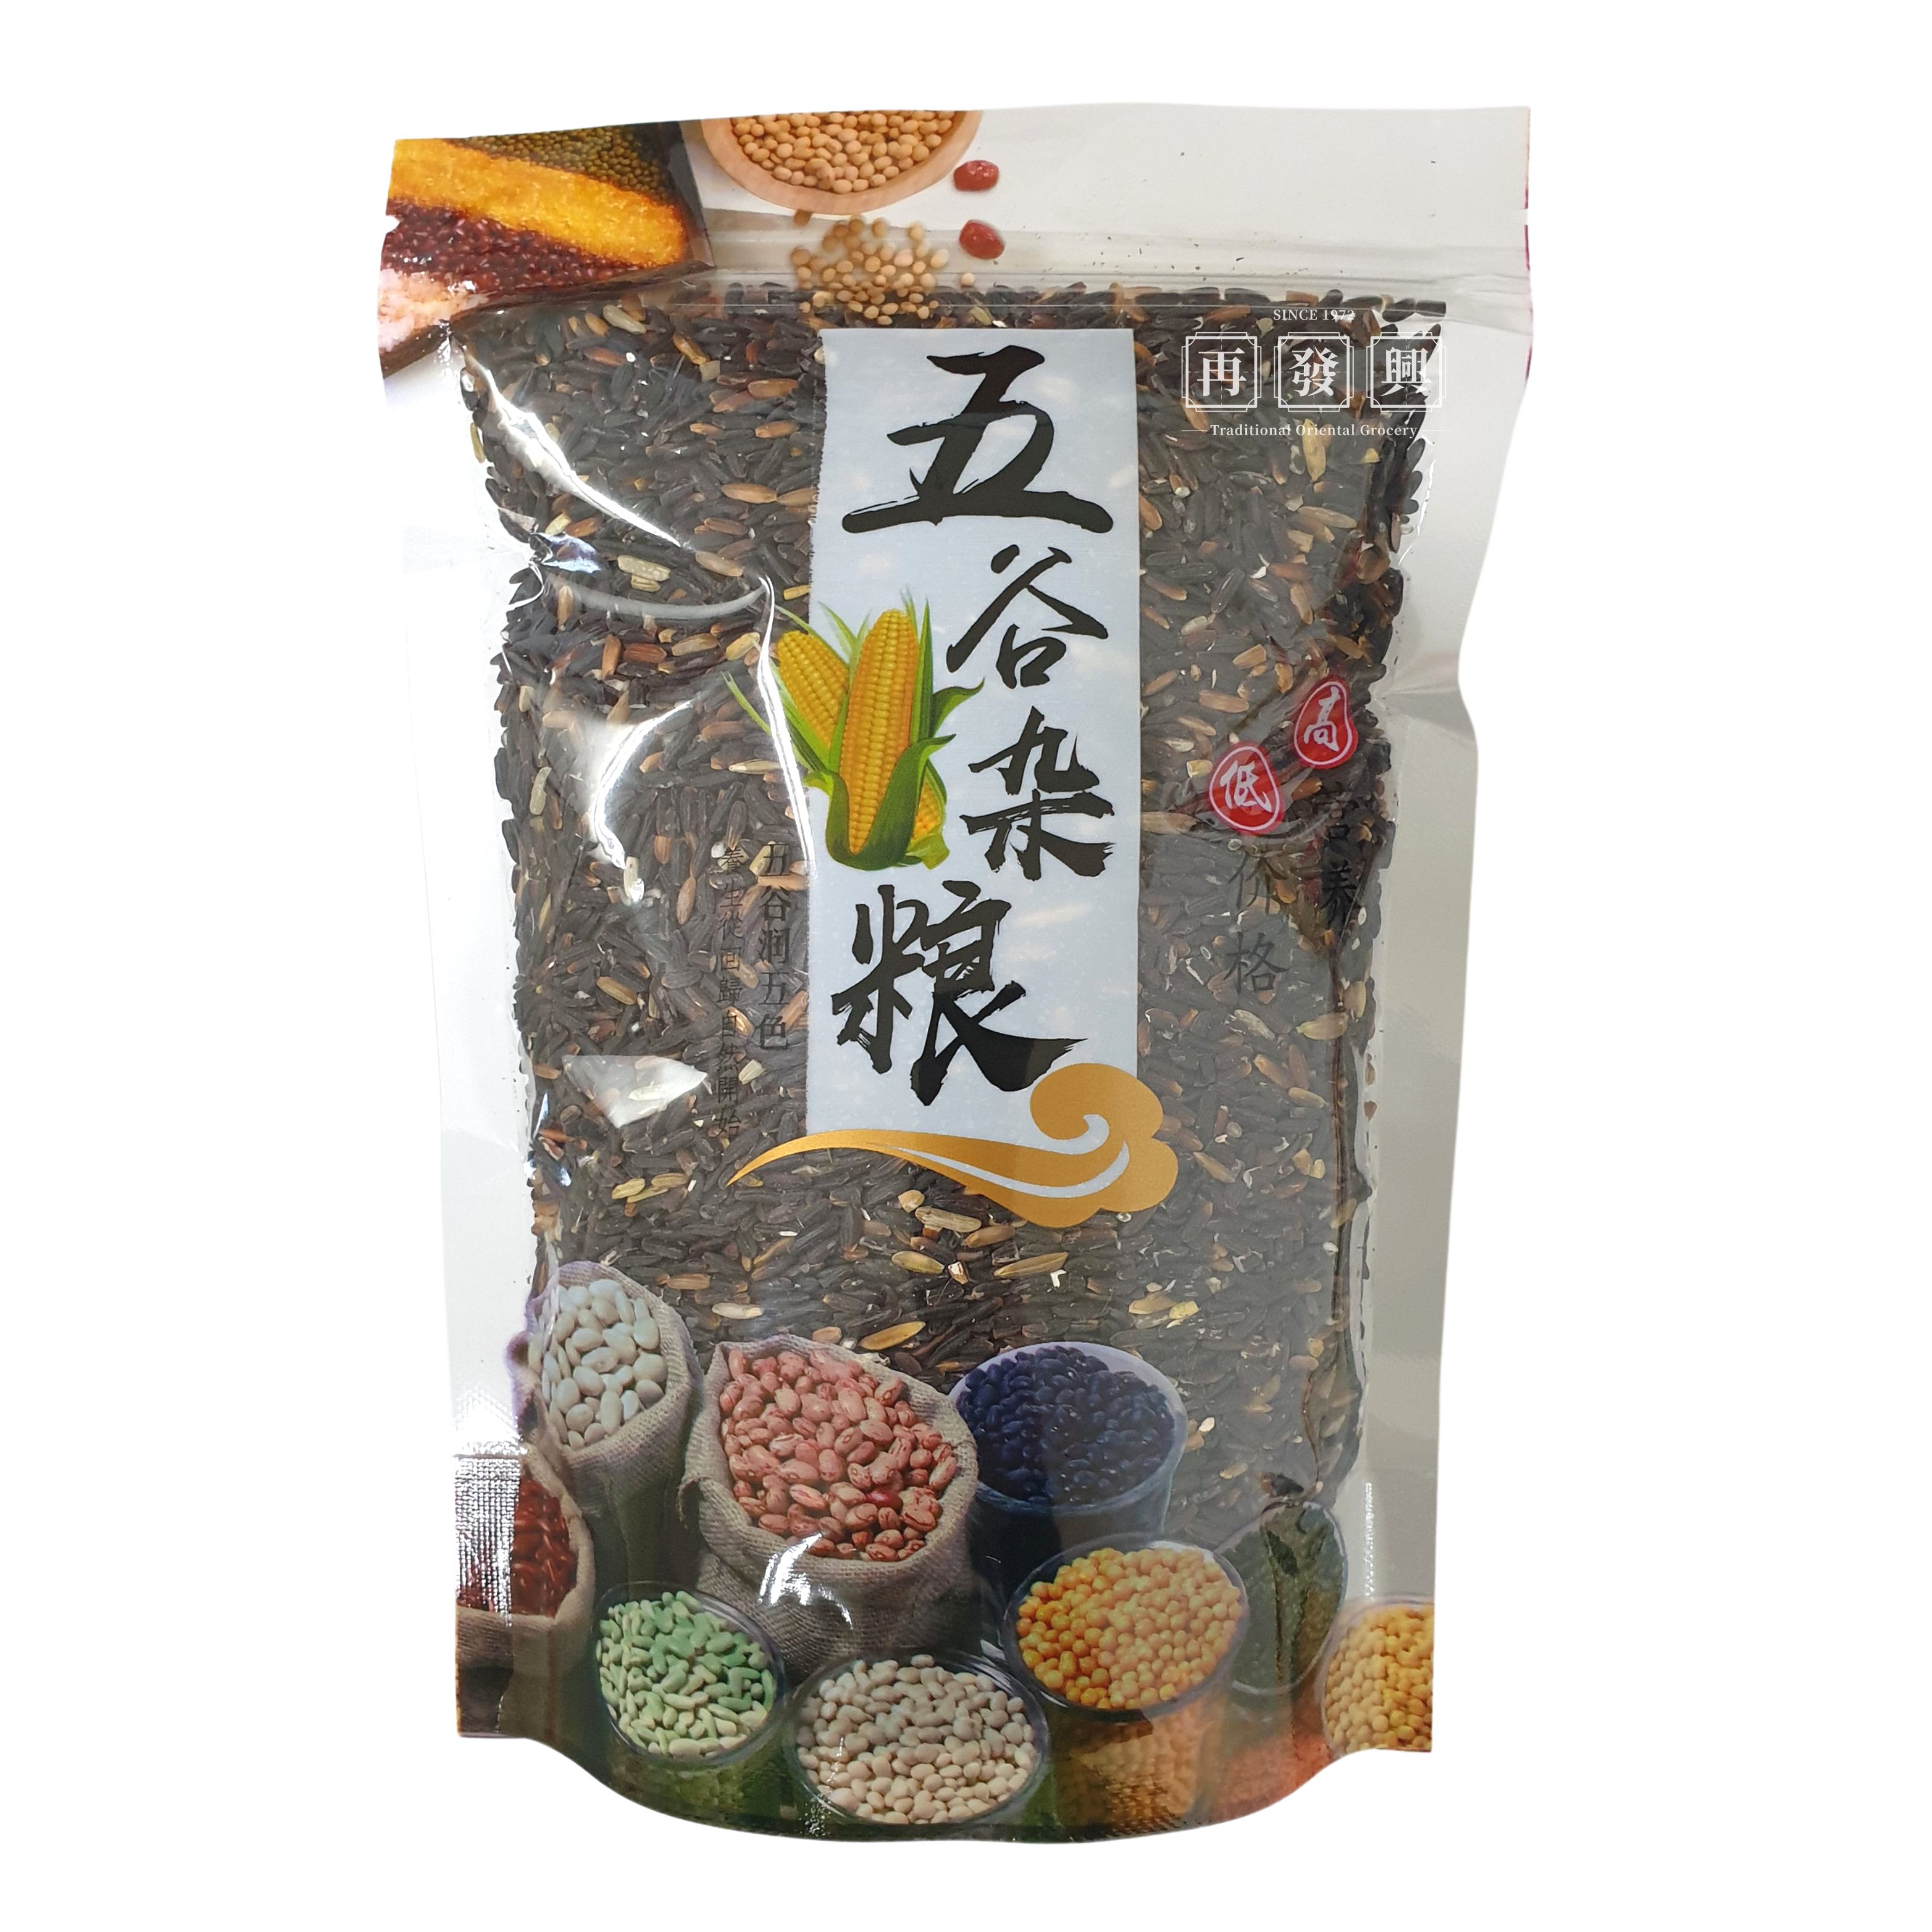 Coarse Grains Series Bean Pack: Black Glutinous Rice 五谷杂粮类(黑檽米) 500g